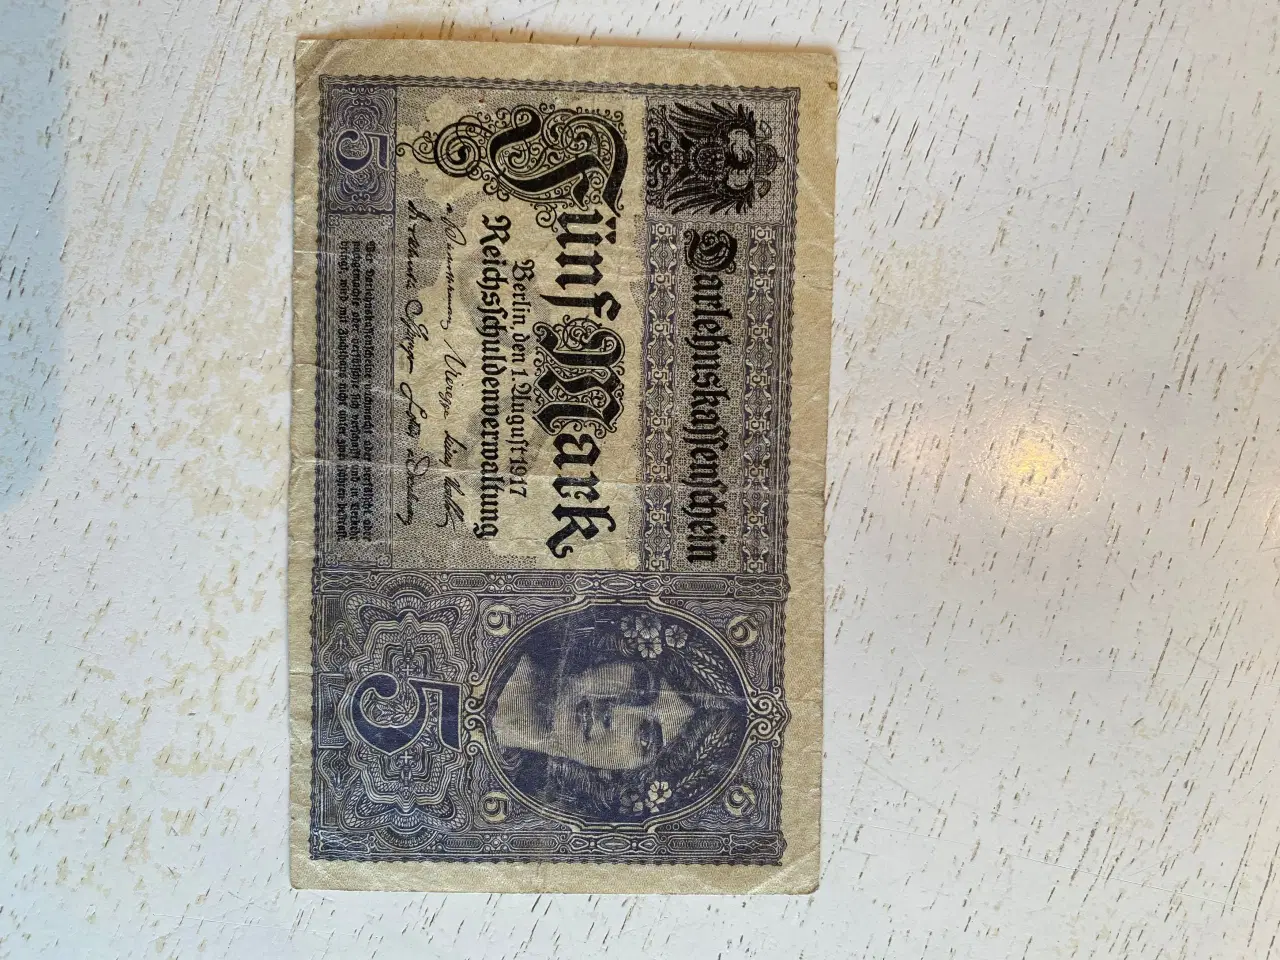 Billede 2 - 5 mark seddel fra 1917